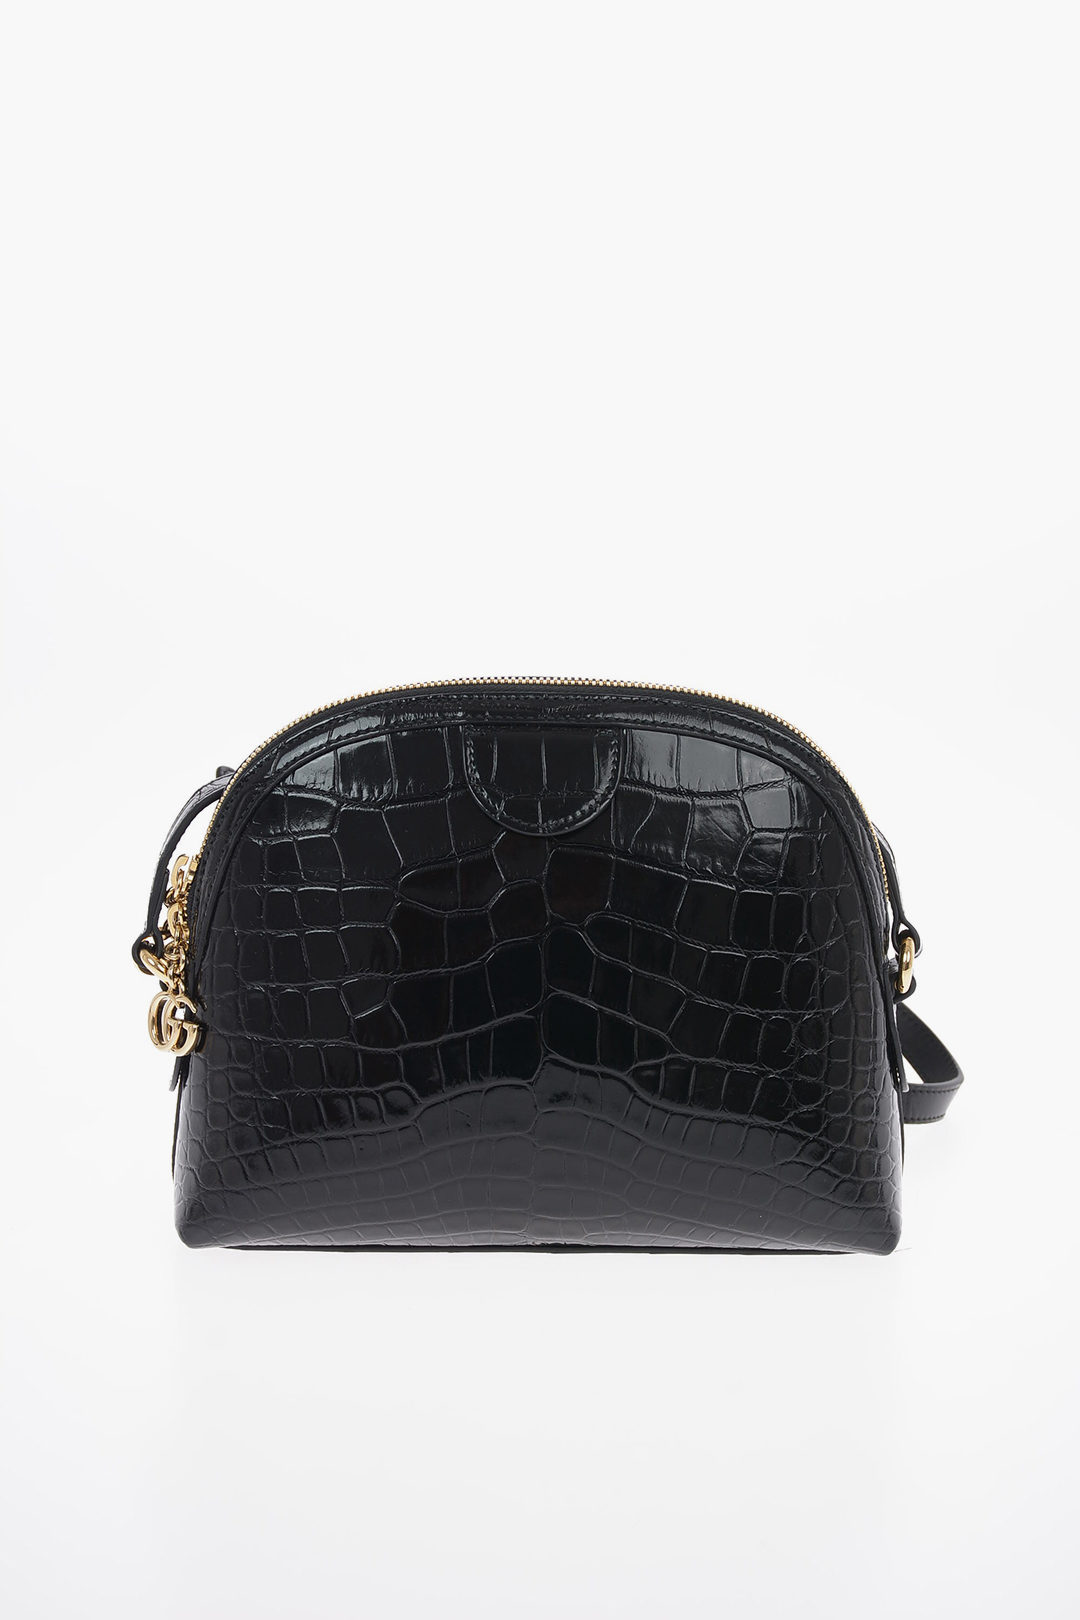 Gucci Crocodile Leather OPHELIA Bag women - Glamood Outlet